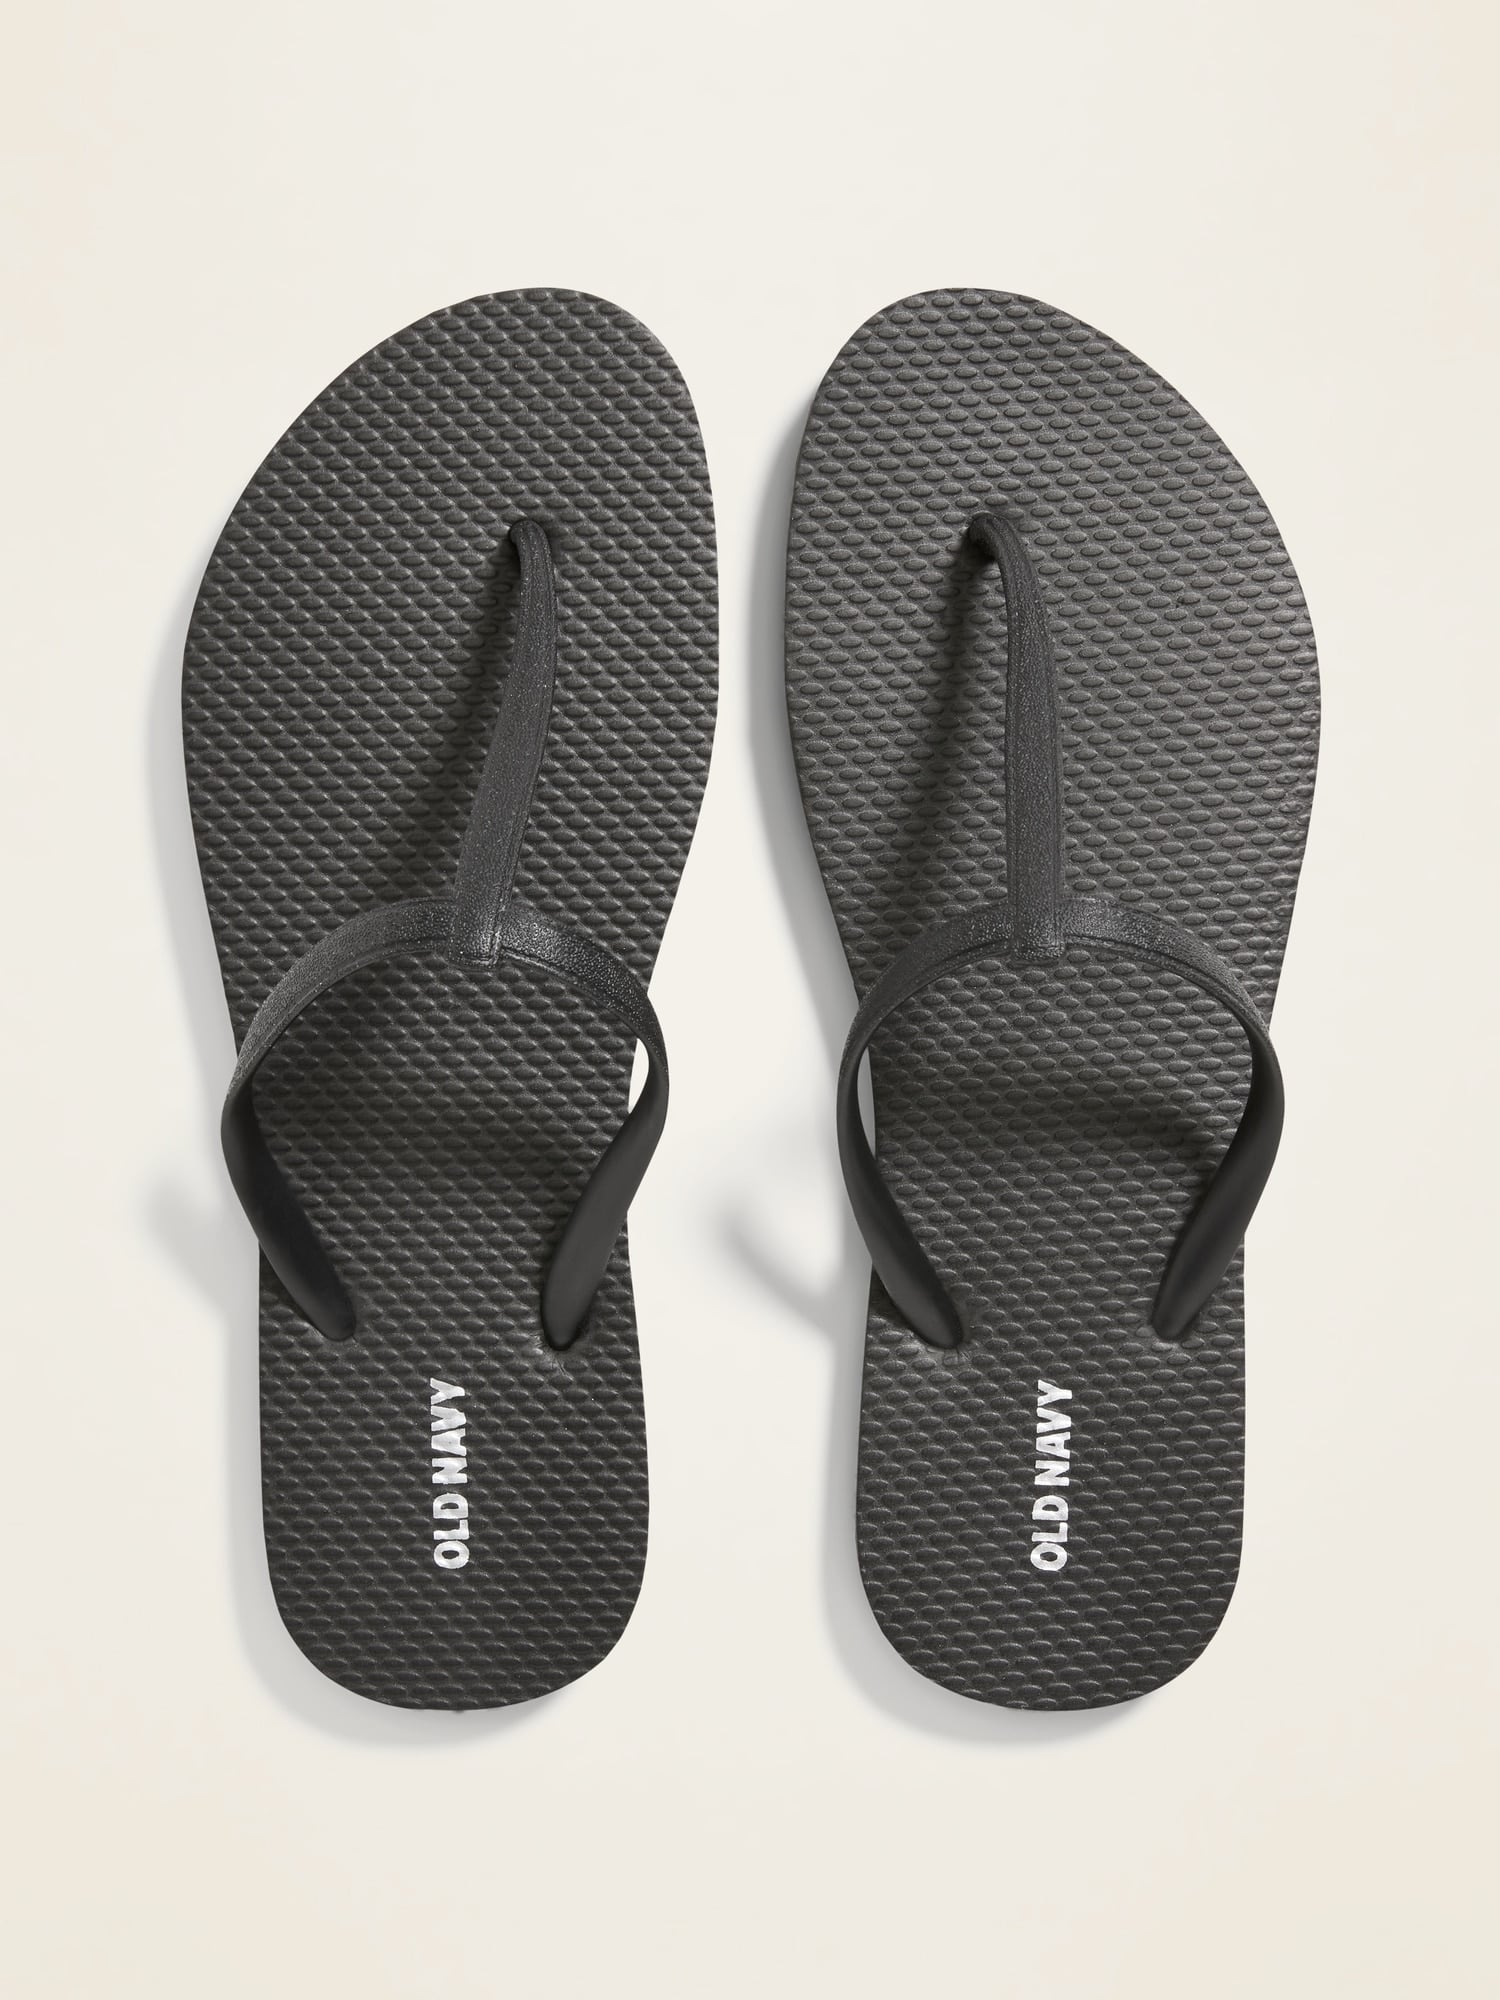 navy flip flop sandals